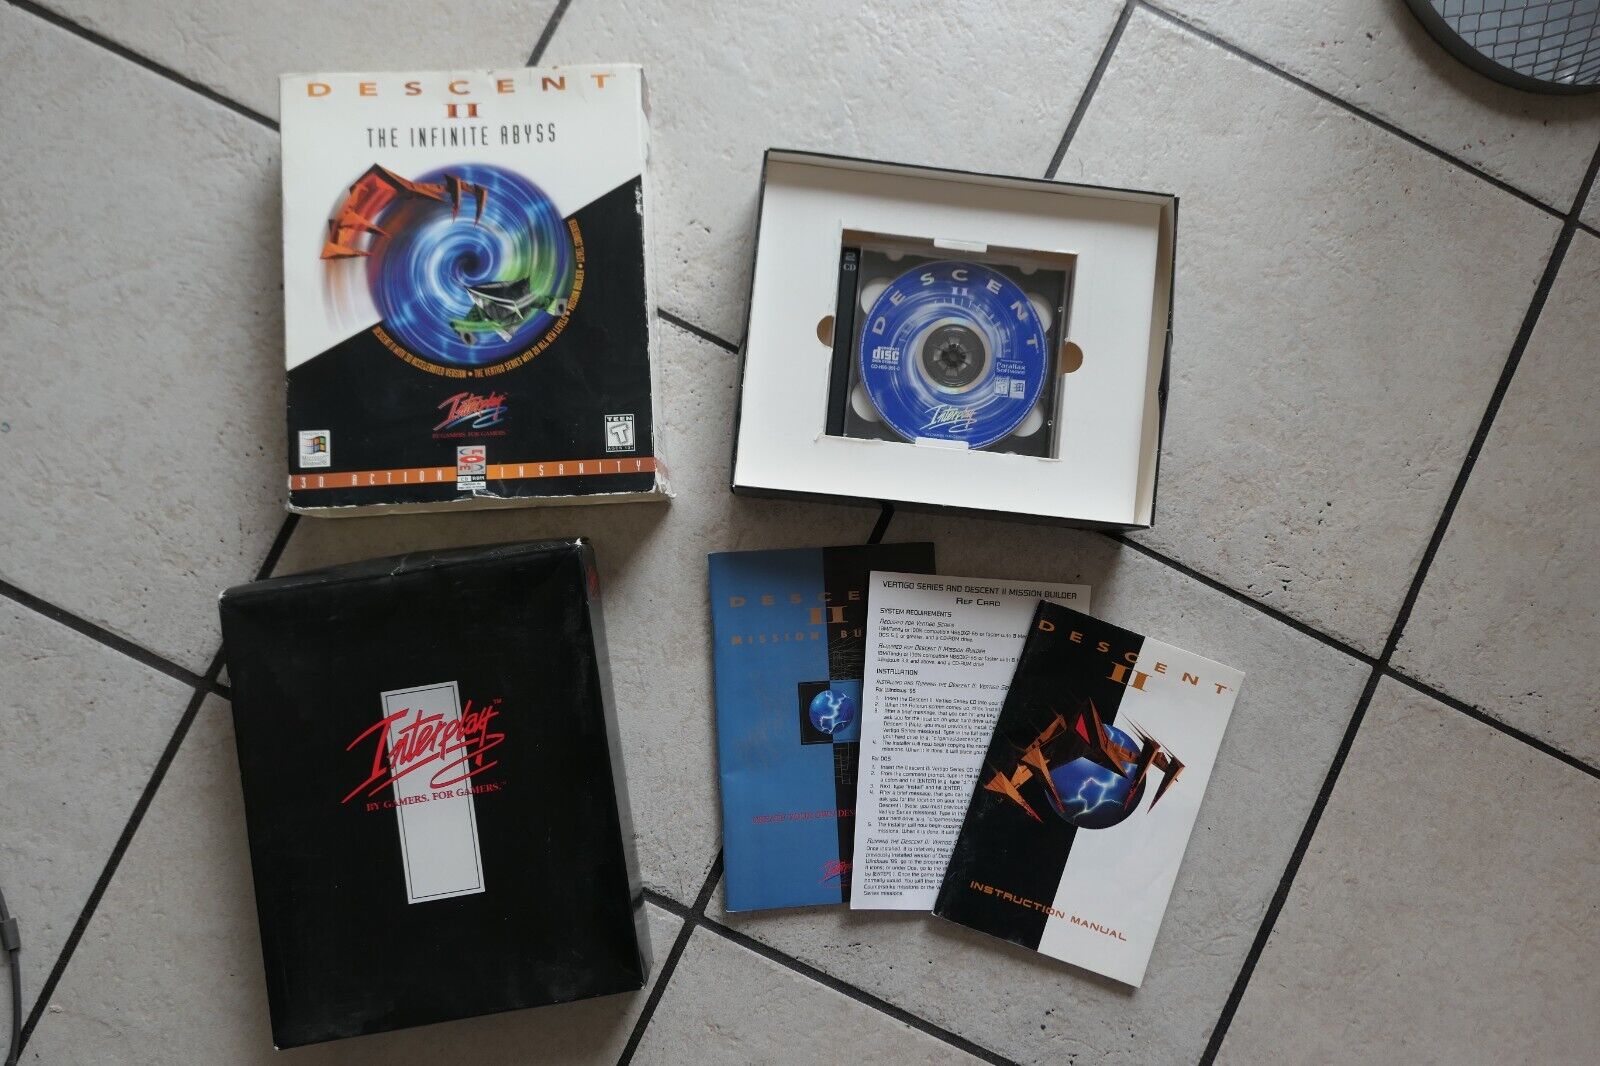 Descent II 2 The Infinite Abyss PC CD ORIGINAL BIG BOX VERSION Windows 95 *RARE*